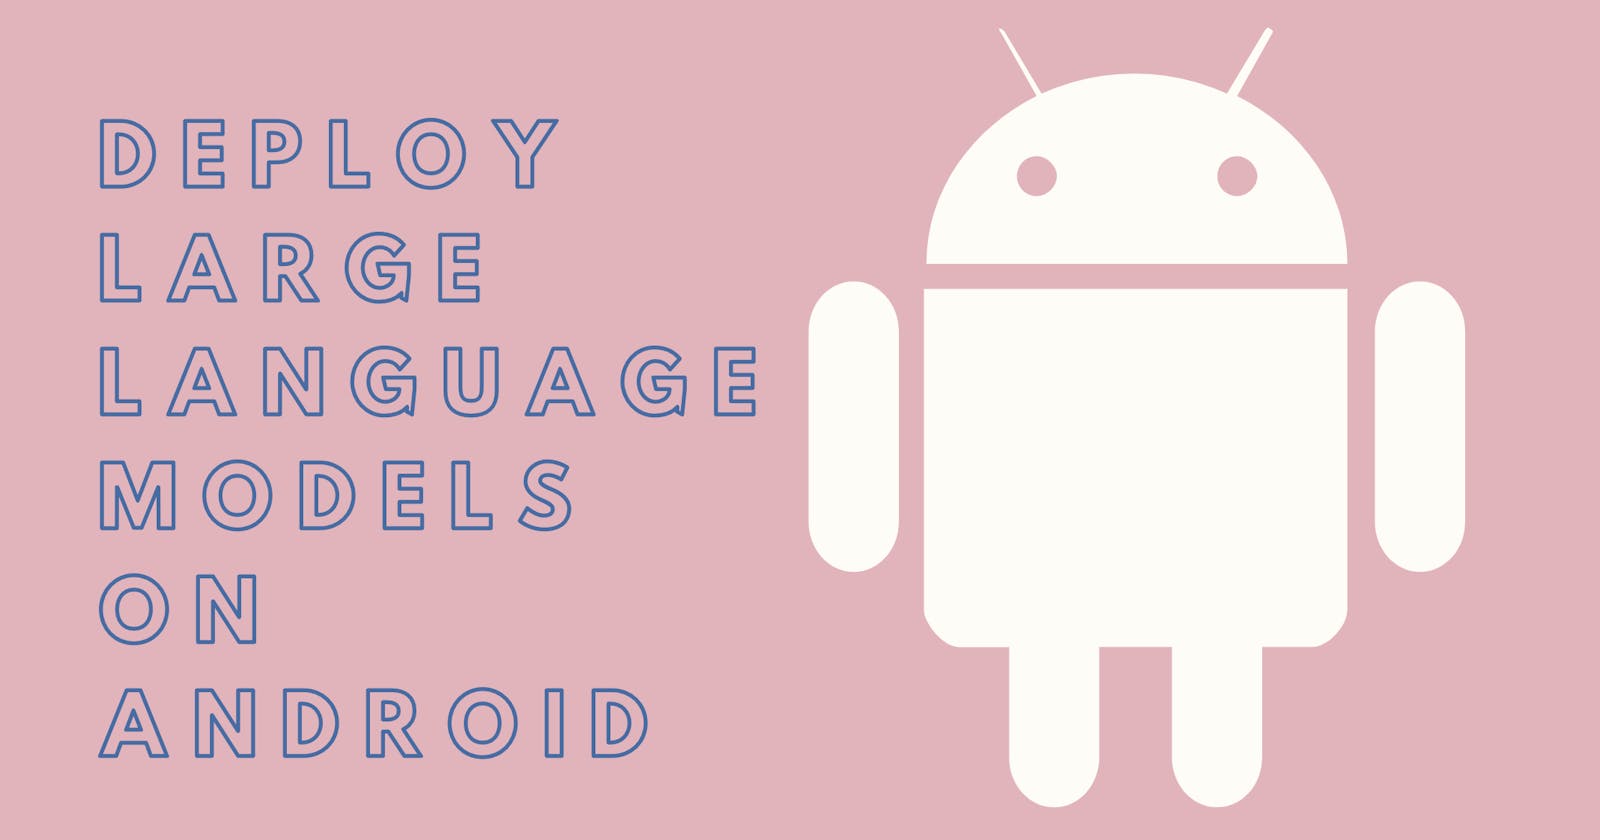 Deploying  Large Language Models on Android